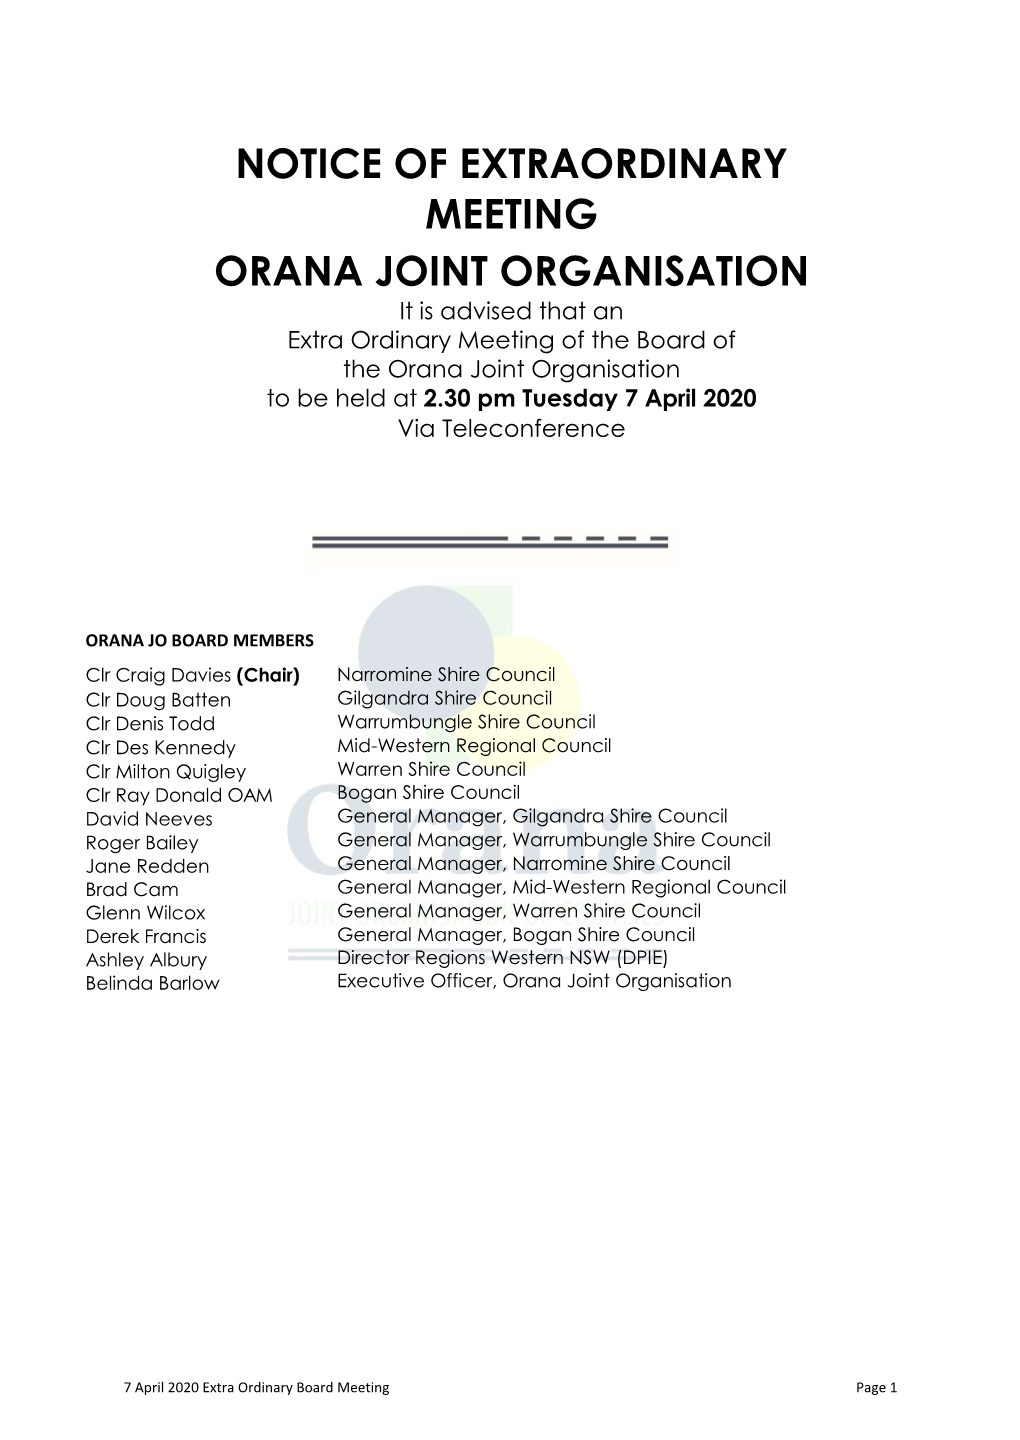 Notice of Extraordinary Meeting Orana Joint